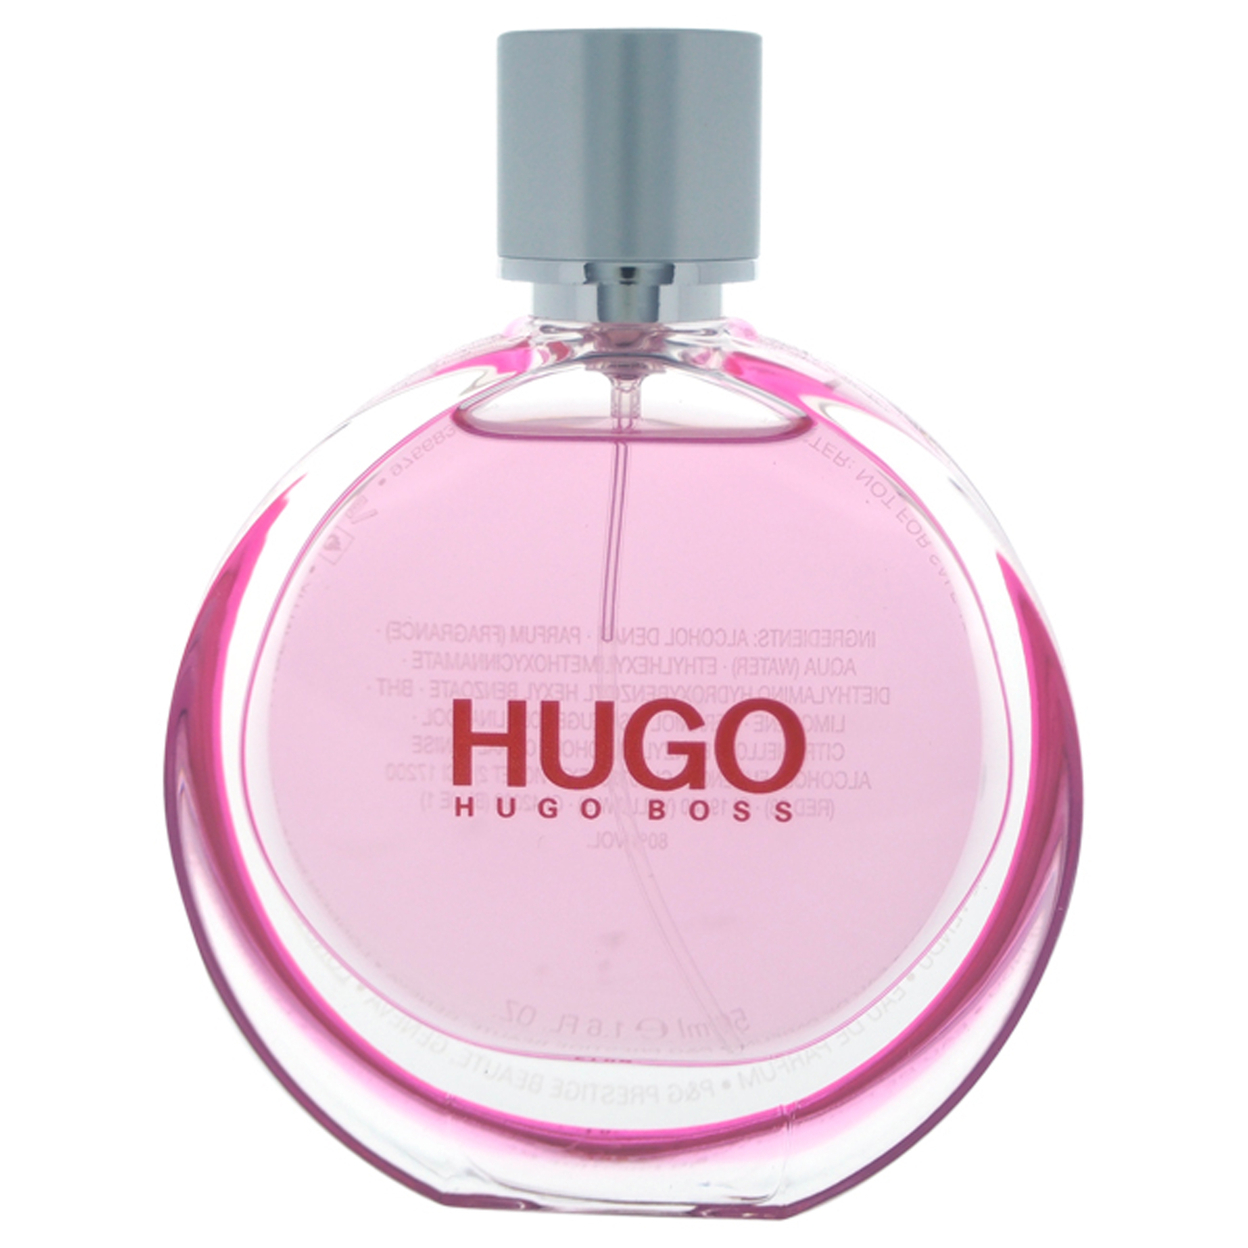 Hugo Boss Hugo Woman Extreme EDP Spray 1.6 Oz